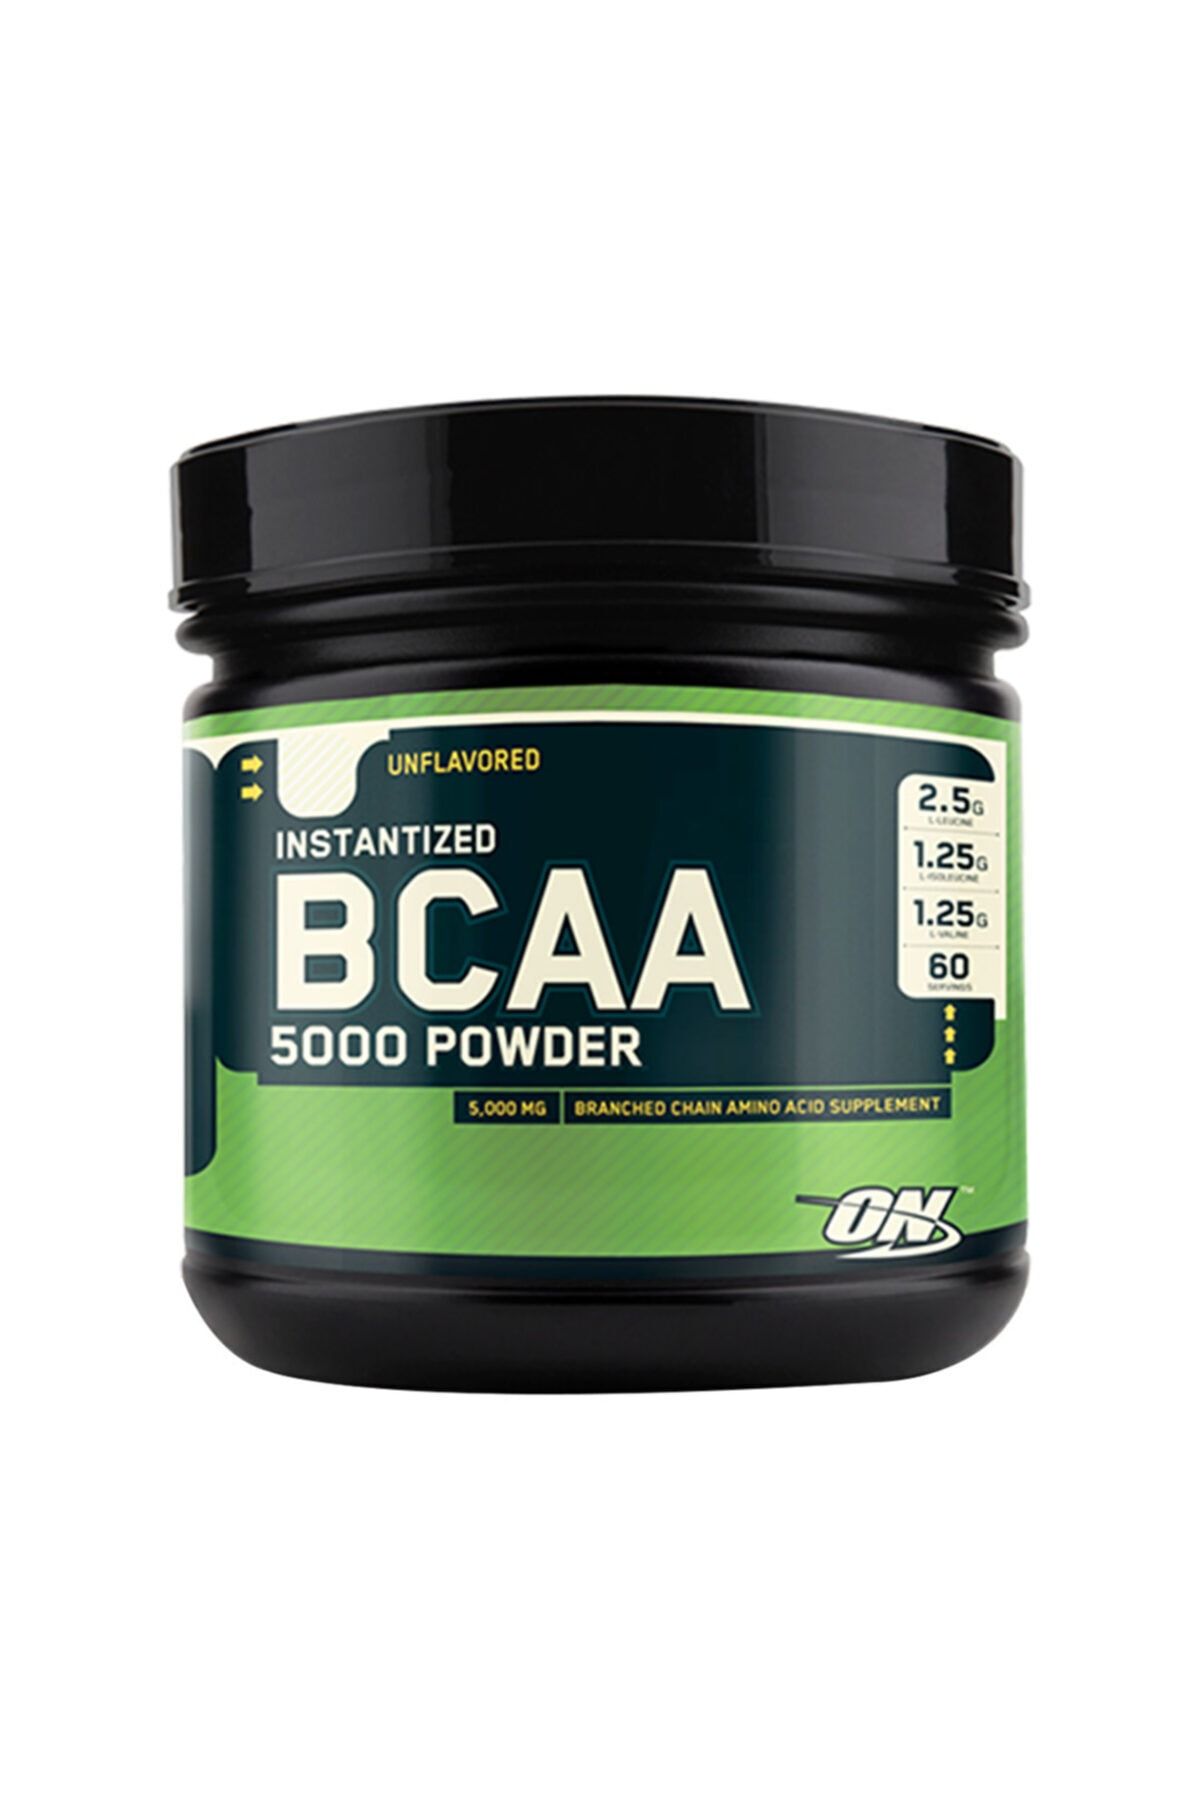 Optimum nutrition powder. BCAA 5000 Powder Optimum Nutrition 345. BCAA Optimum Nutrition BCAA 5000 Powder. Optimum Nutrition Glutamine Powder 300 г. BCAA Optimum Nutrition порошок.